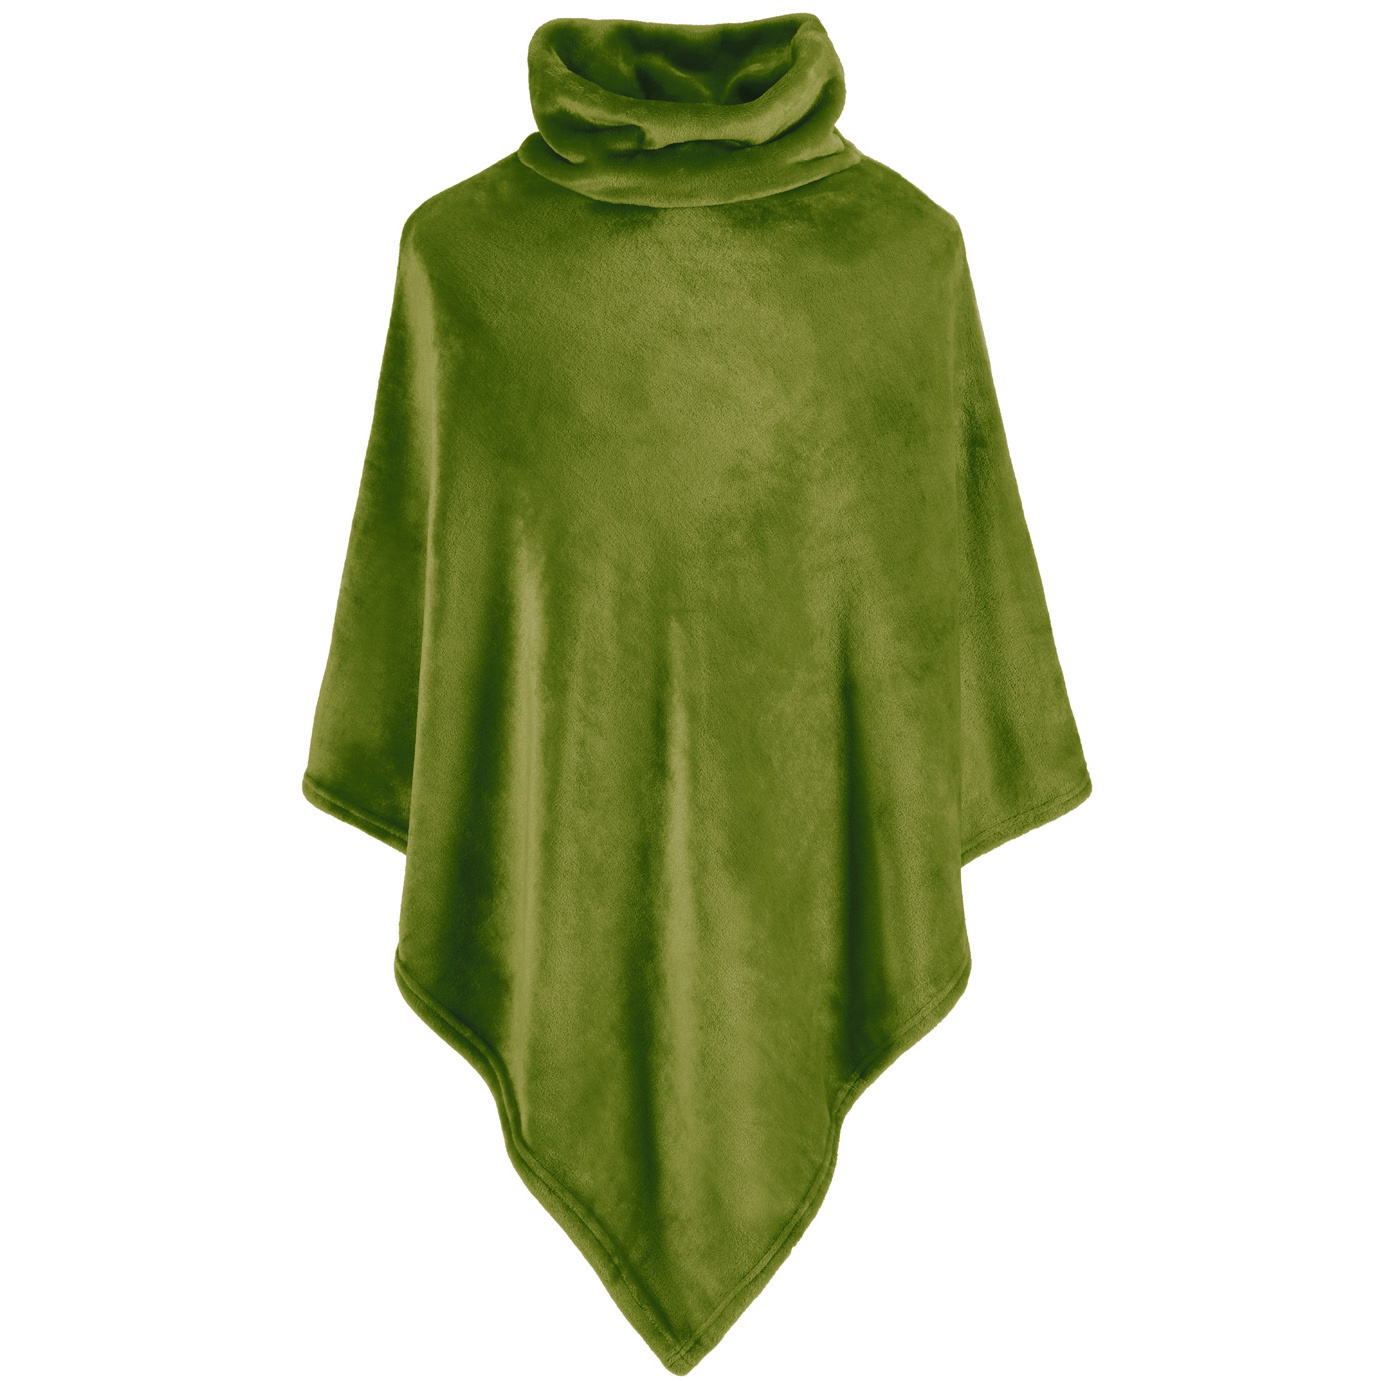 Moodit Poncho Fleece, Cactus Green - 80 x 80 cm - Polyester